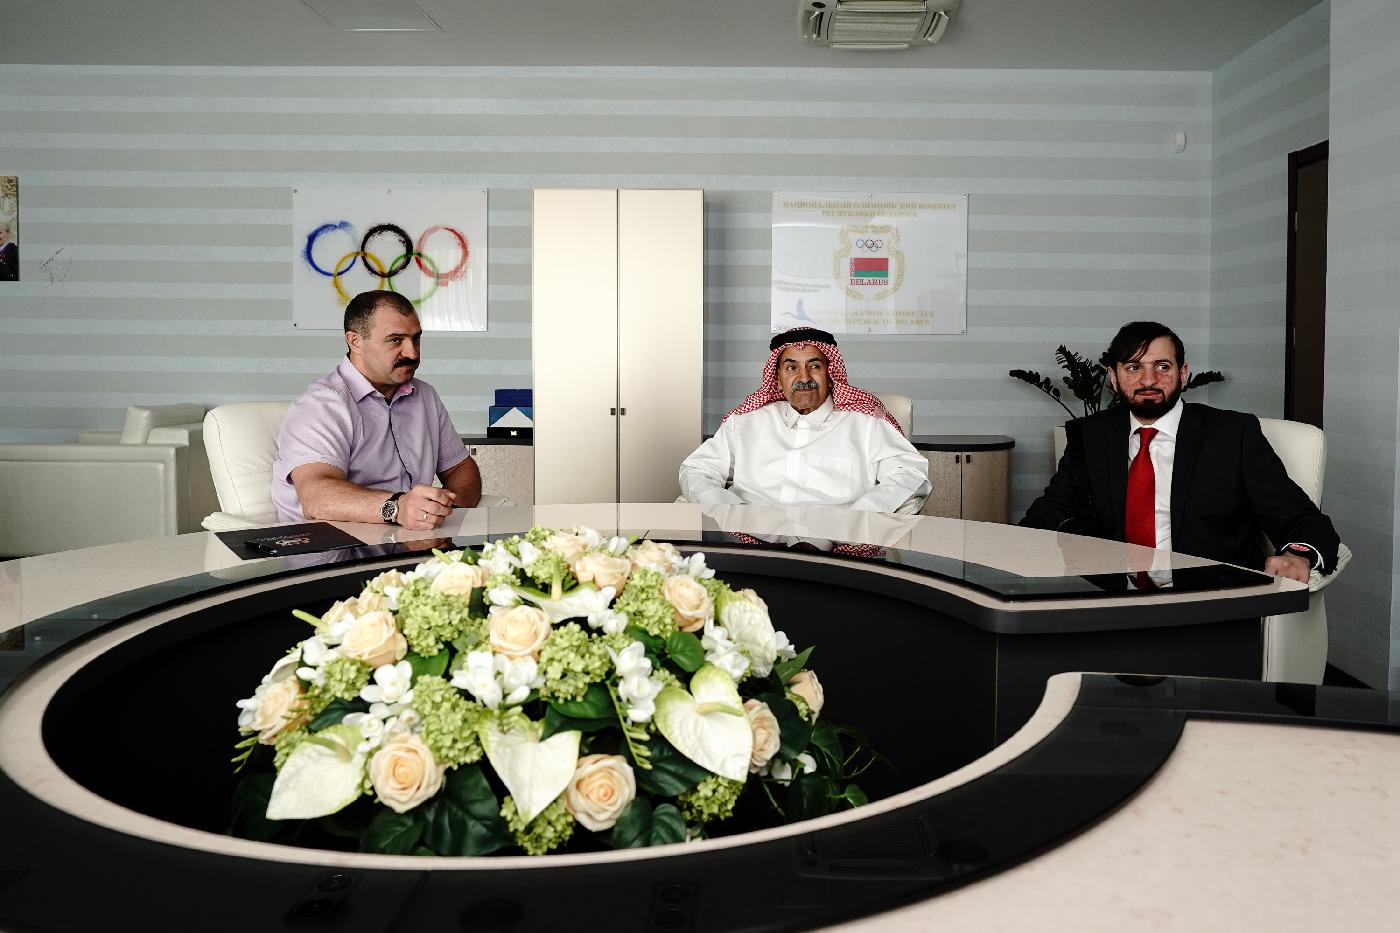 Представитель Катарского олимпийского комитета посетил с визитом НОК Беларуси